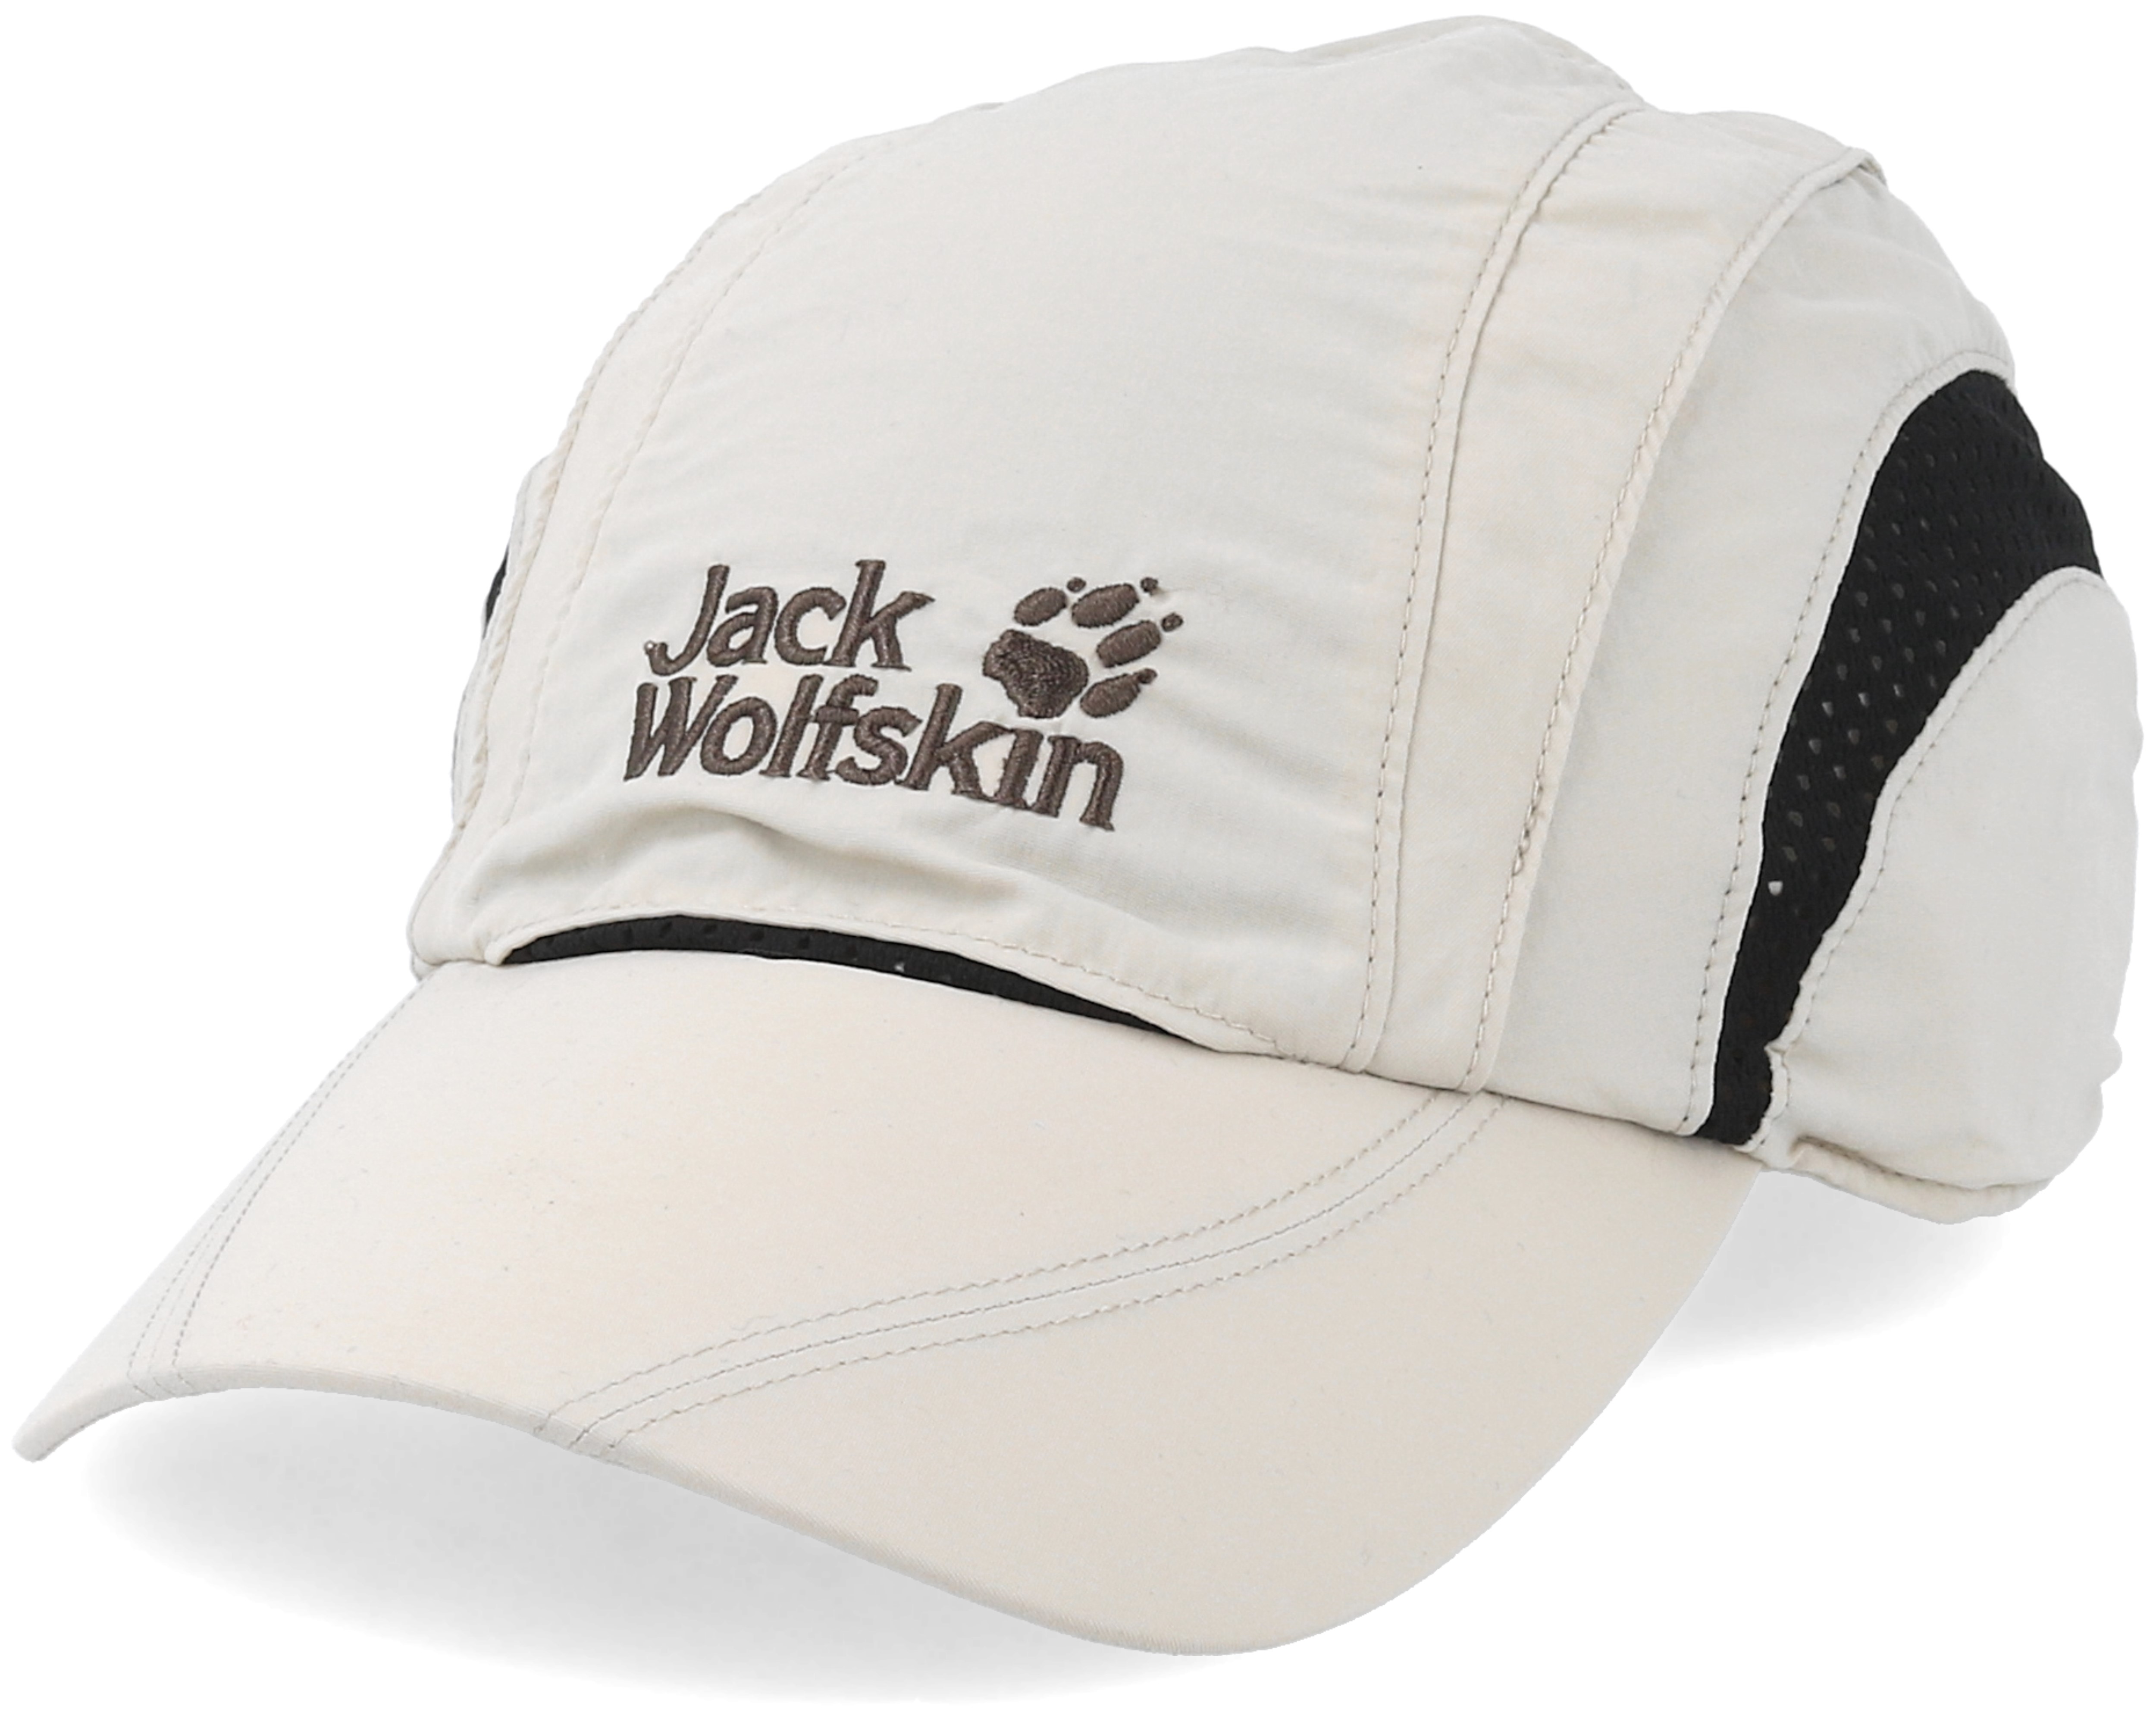 Light Jack Adjustable Cap - Vent Pro Wolfskin Sand cap